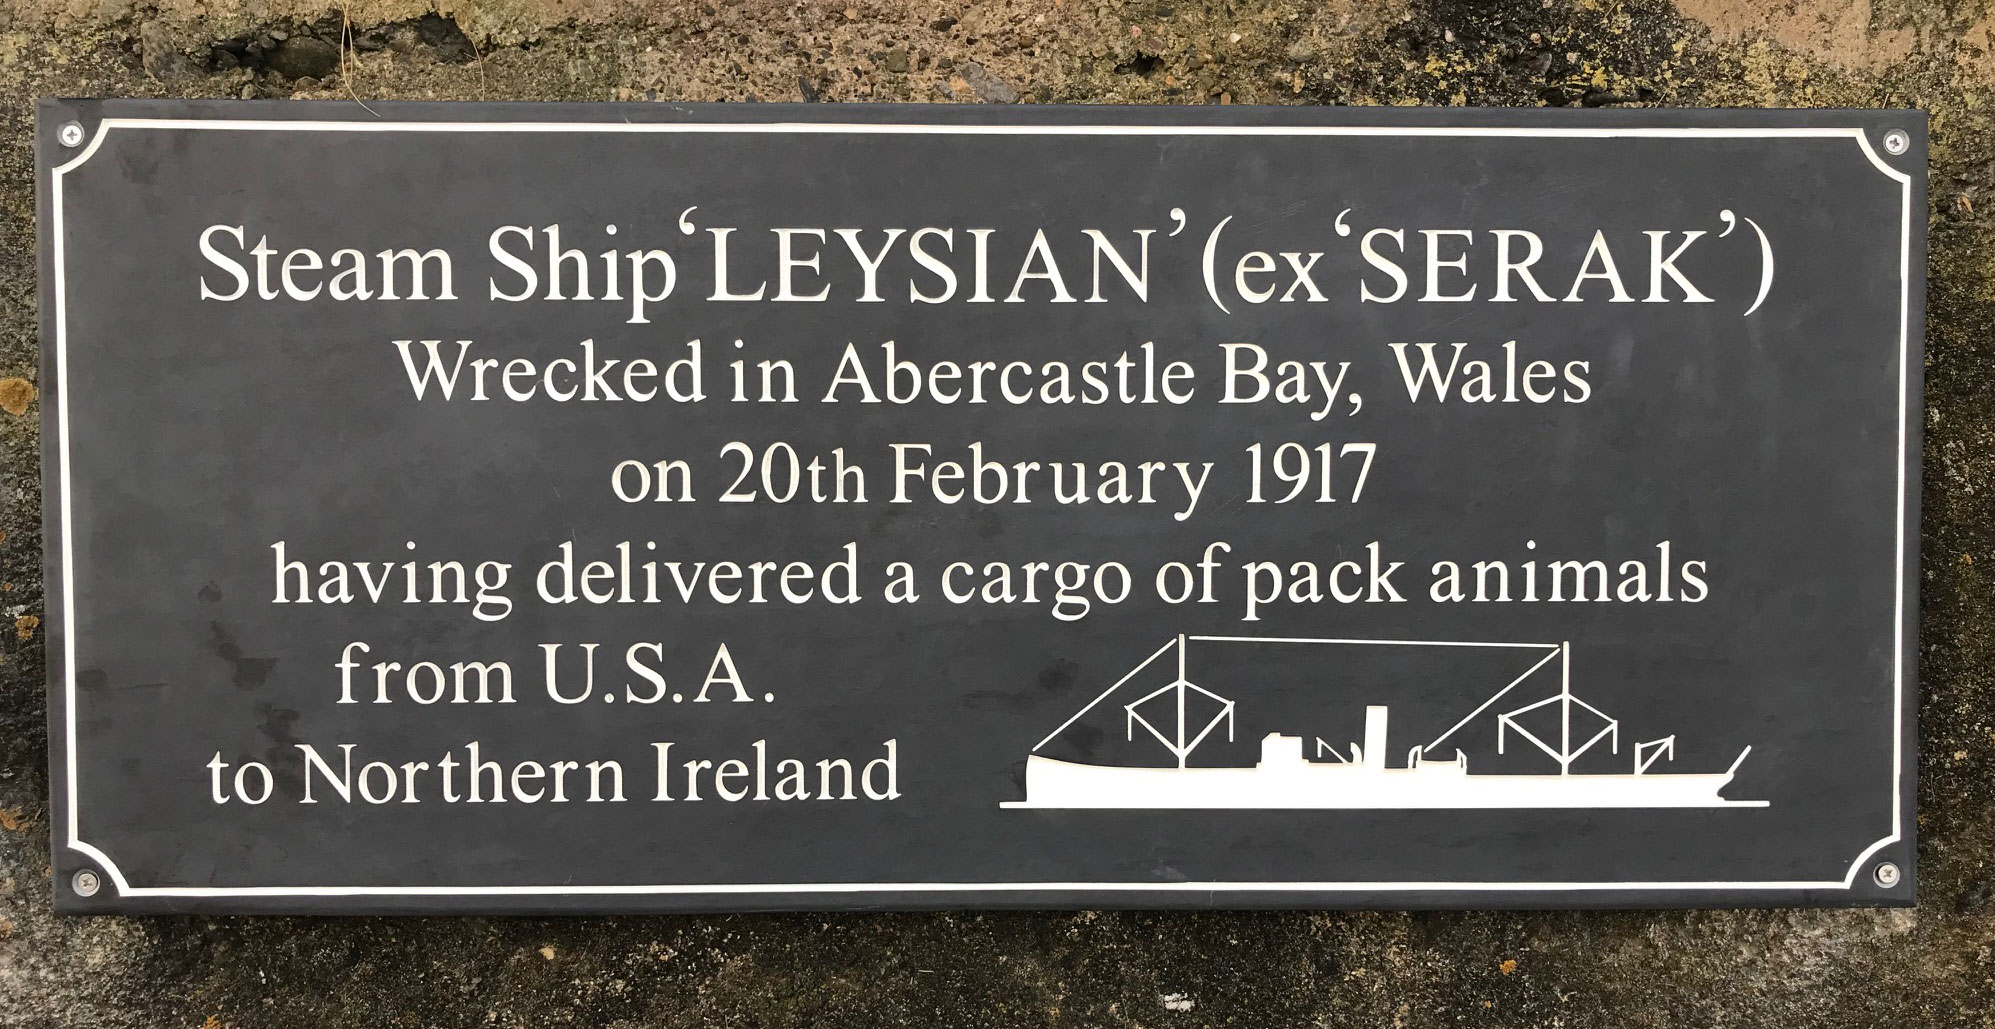 Unveiling the plaque at Abercastle